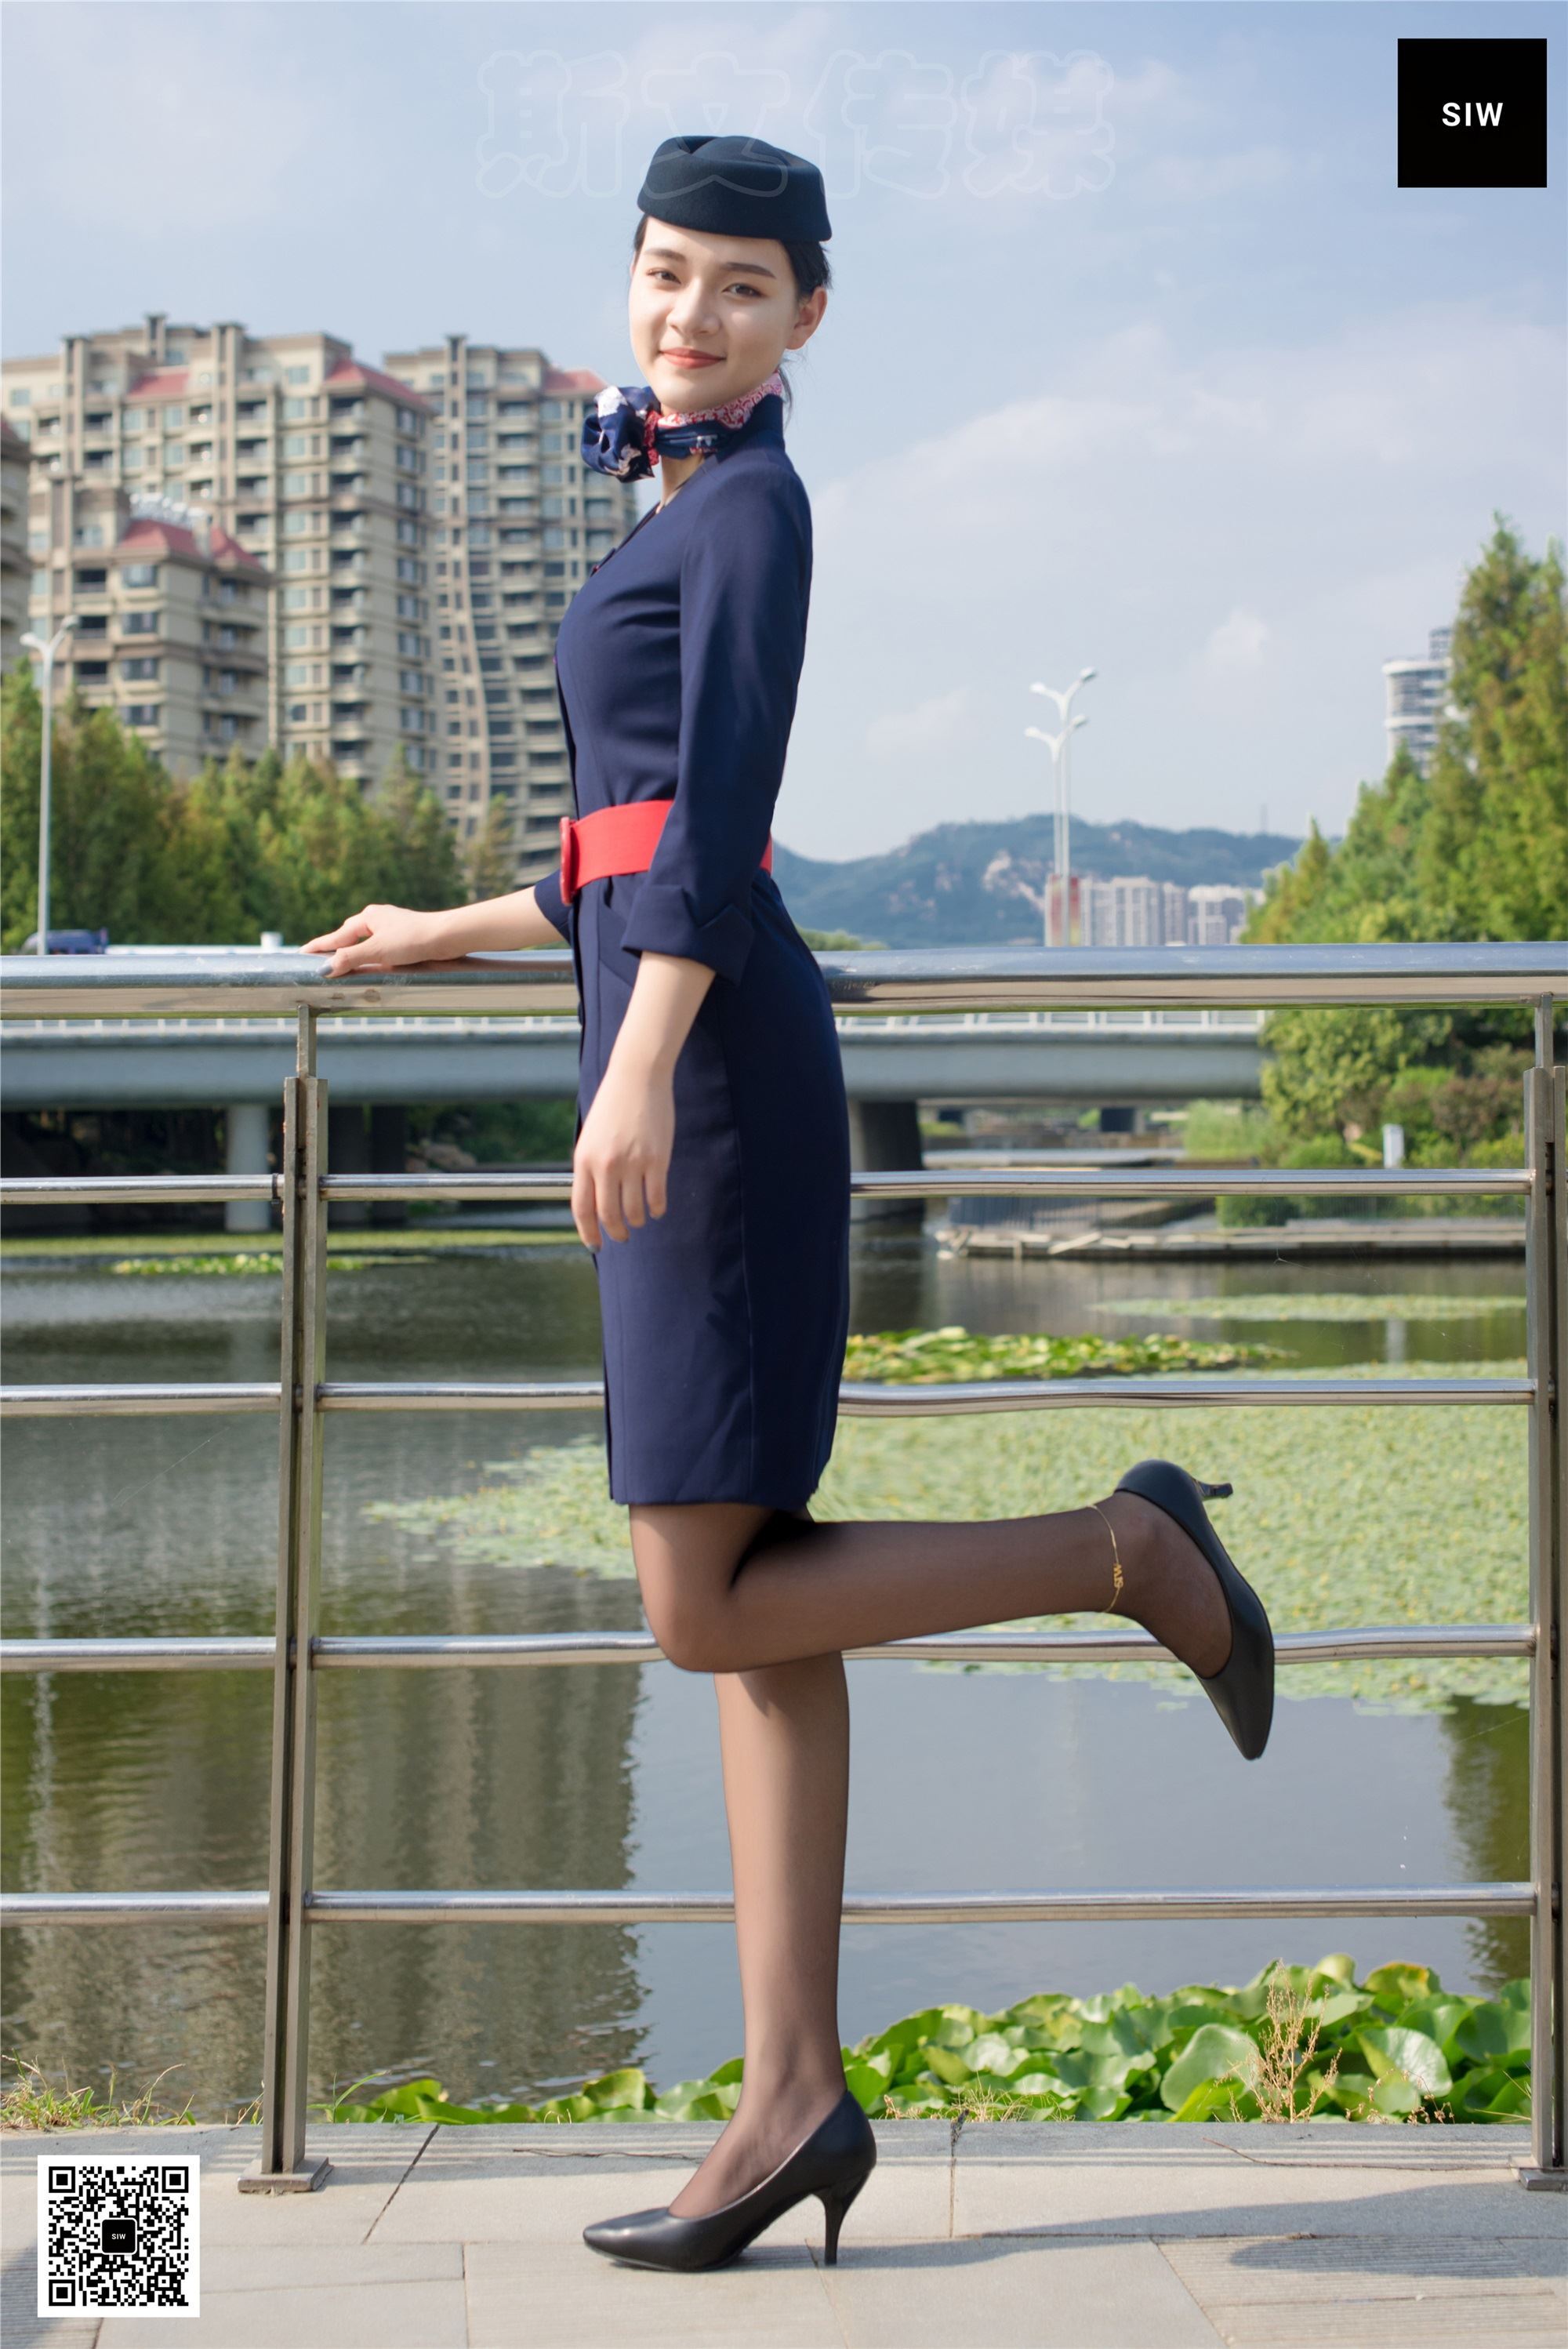 SIW Siwen Media 051 China Eastern Airlines uniform, cap, scarf, skirt, four pieces set - Siqi